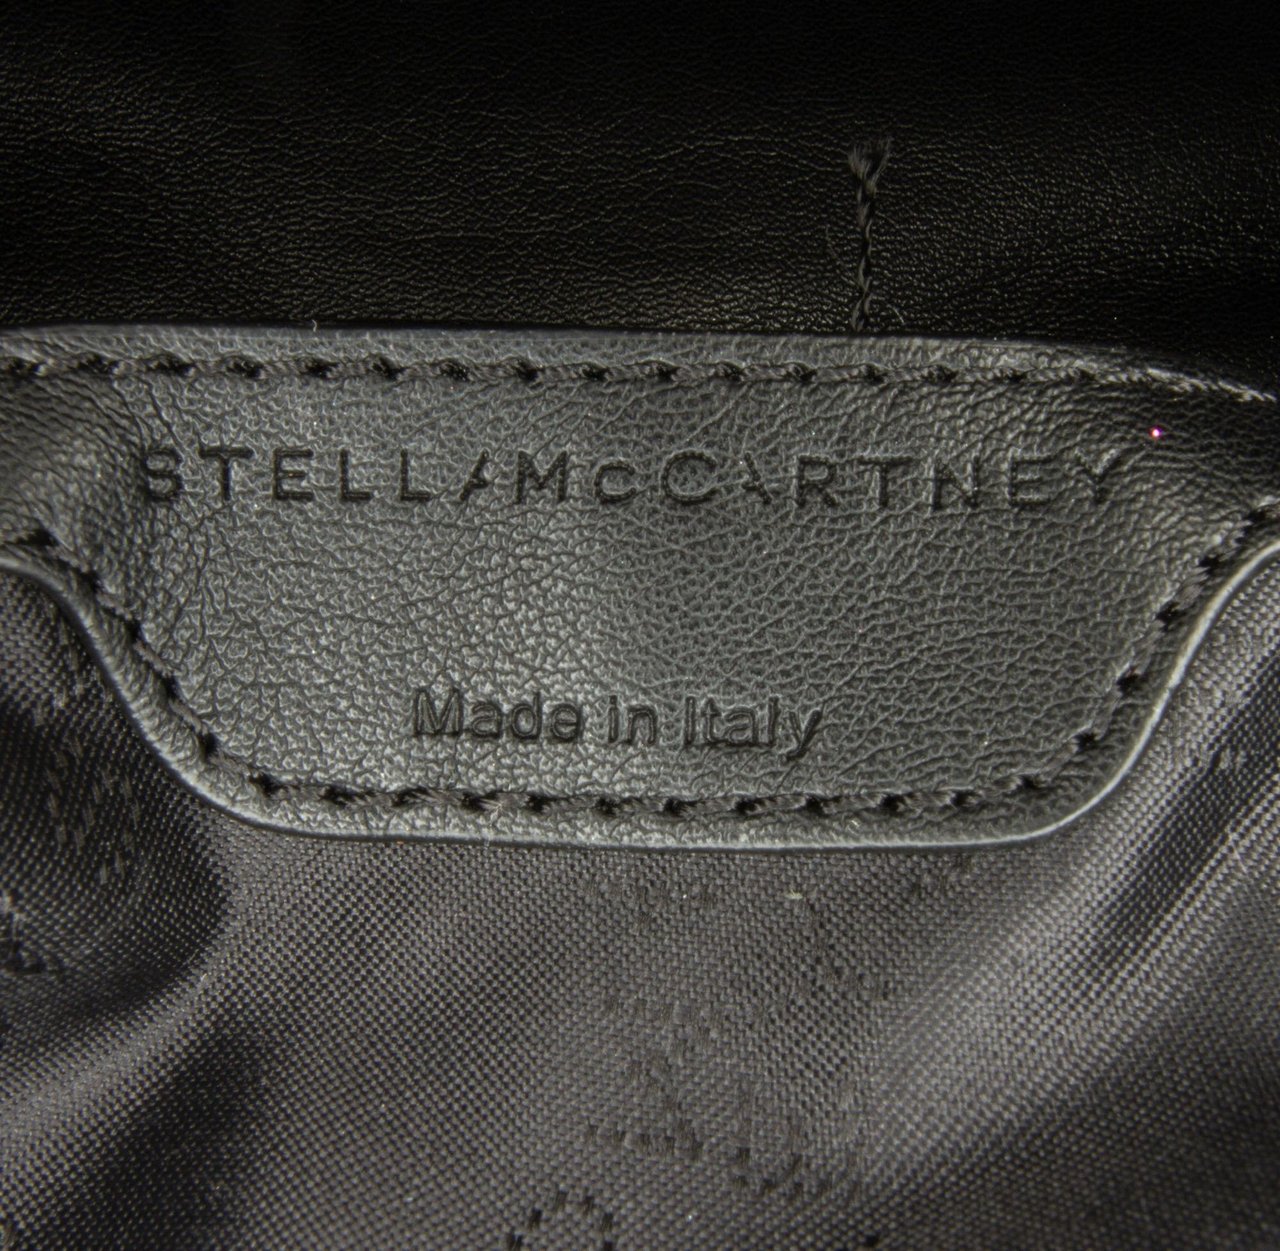 Stella McCartney Falabella Stella Star Crossbody Bag Zwart